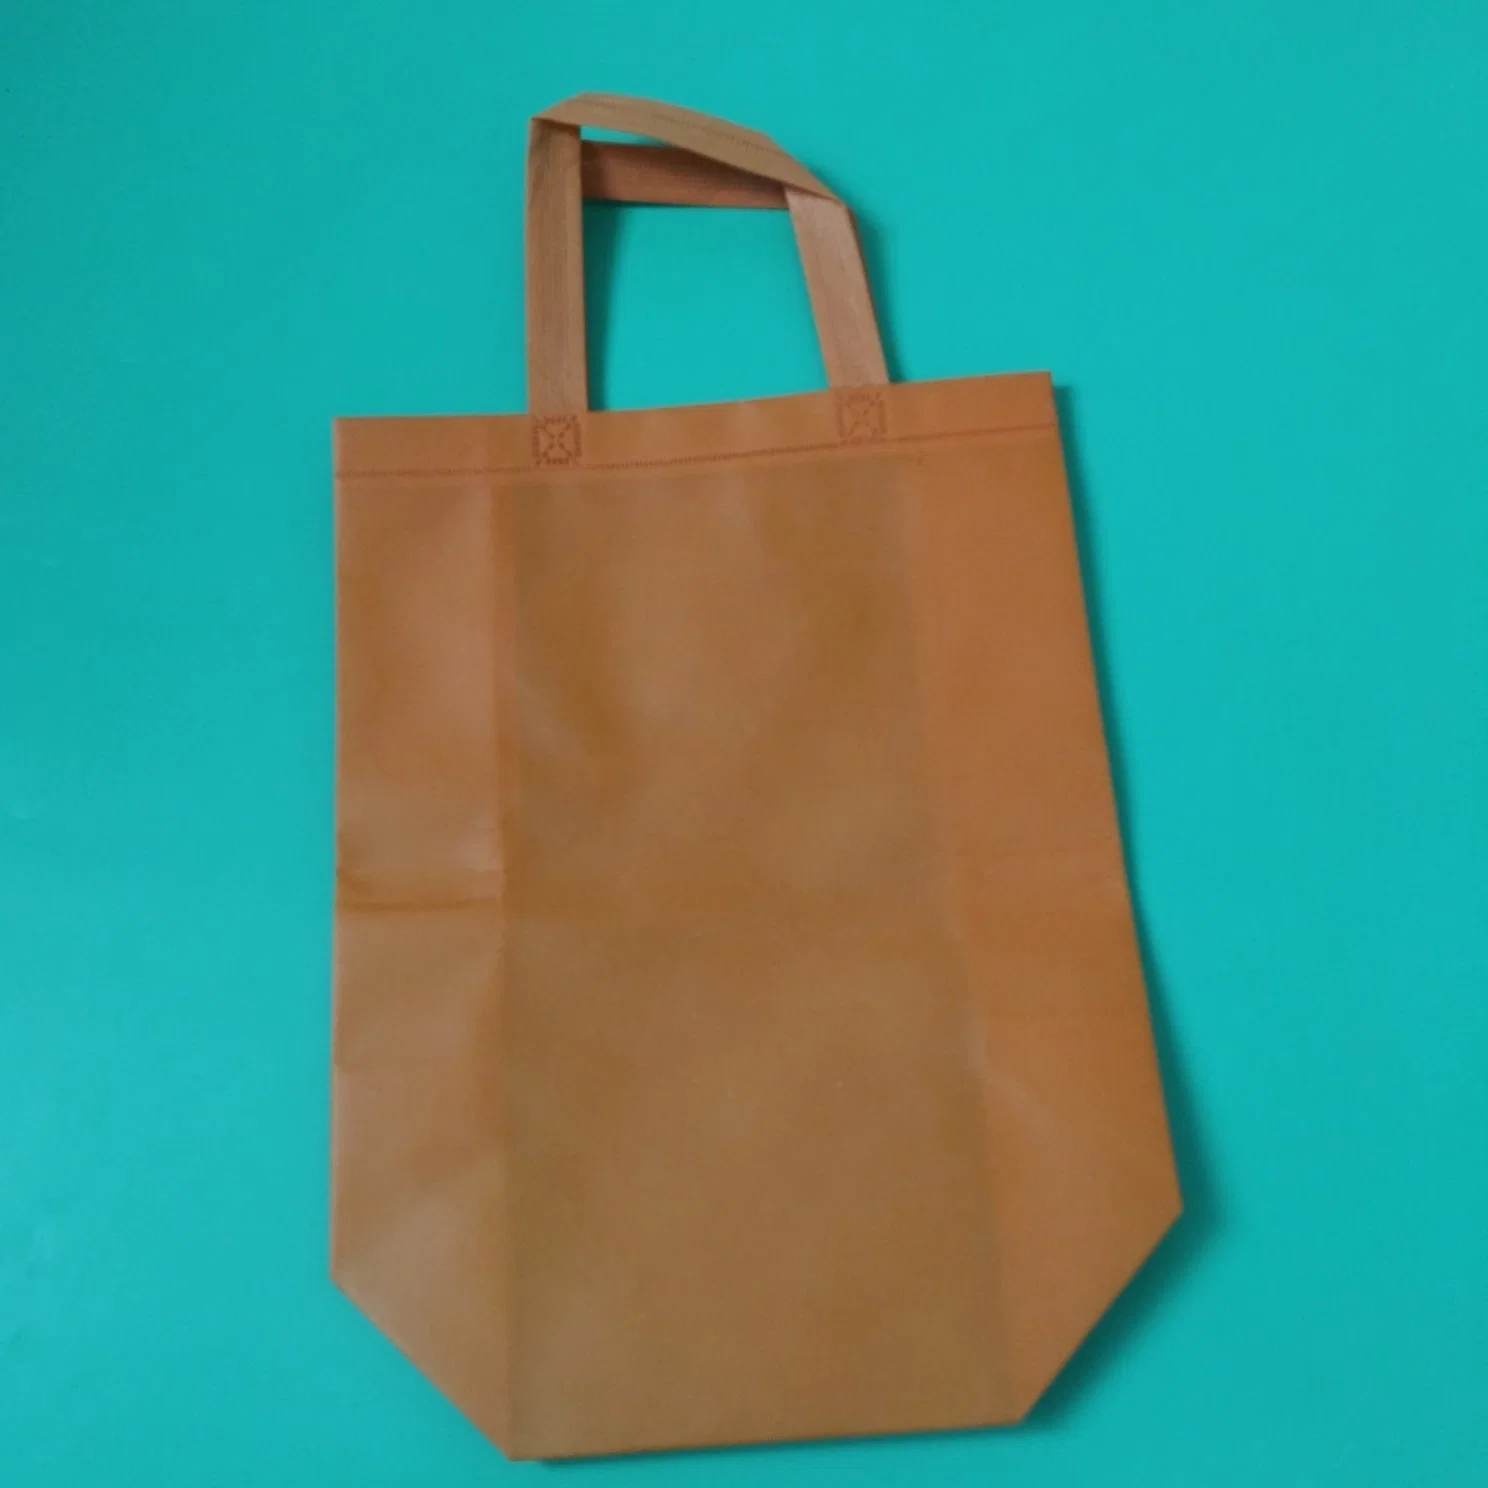 Small Non Woven Vest Bag in Orange for Shopping